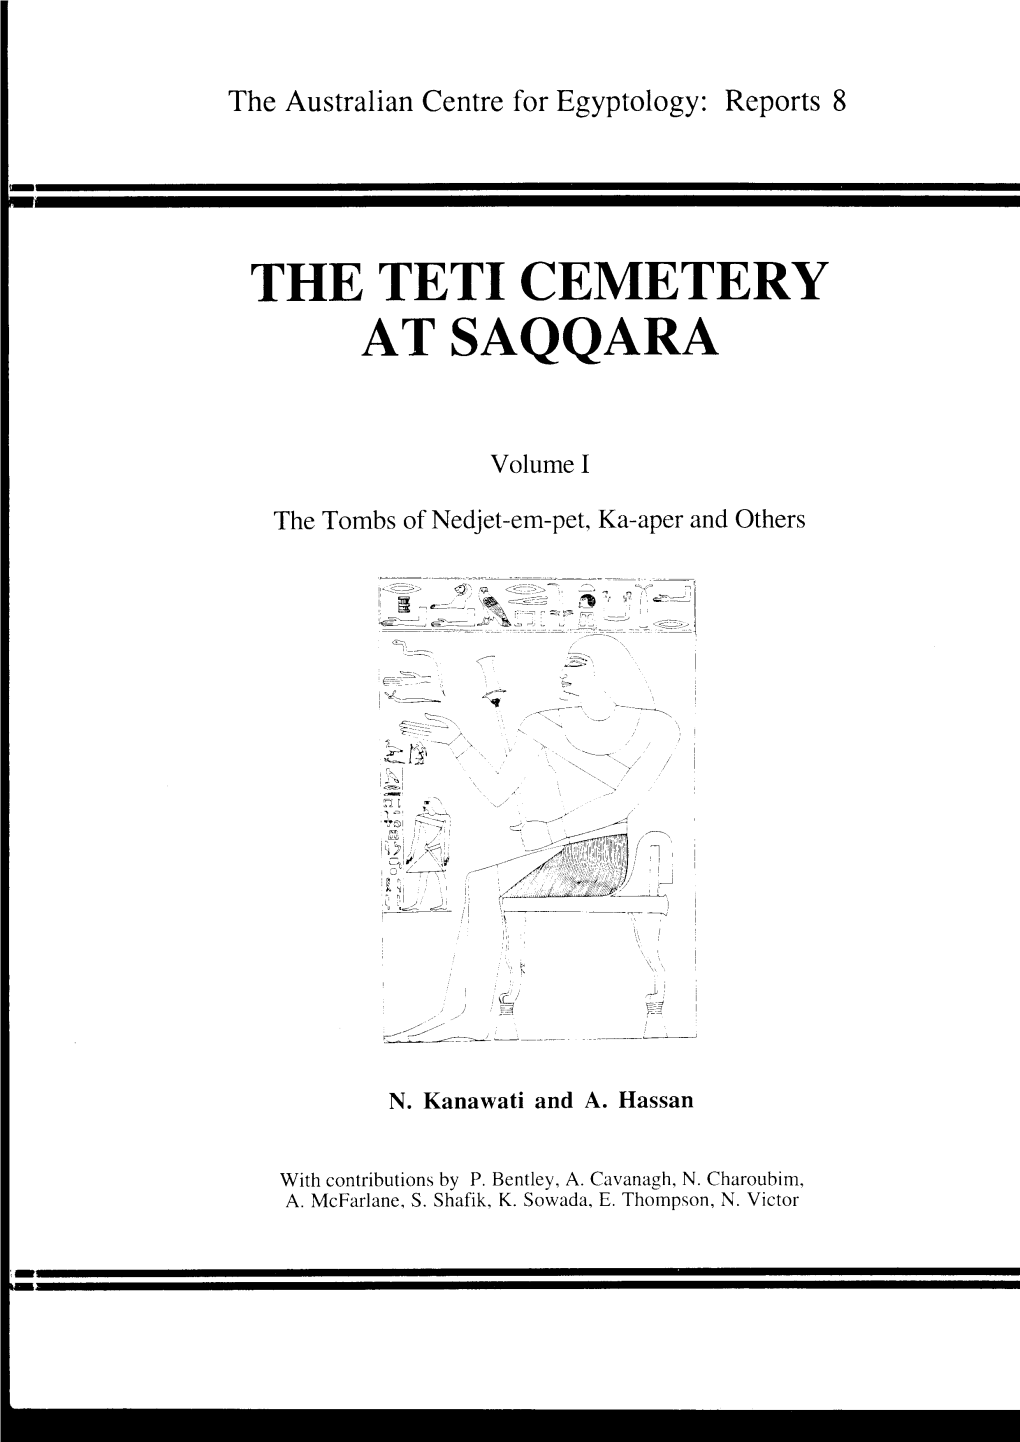 The Teti Cemetery at Saqqara